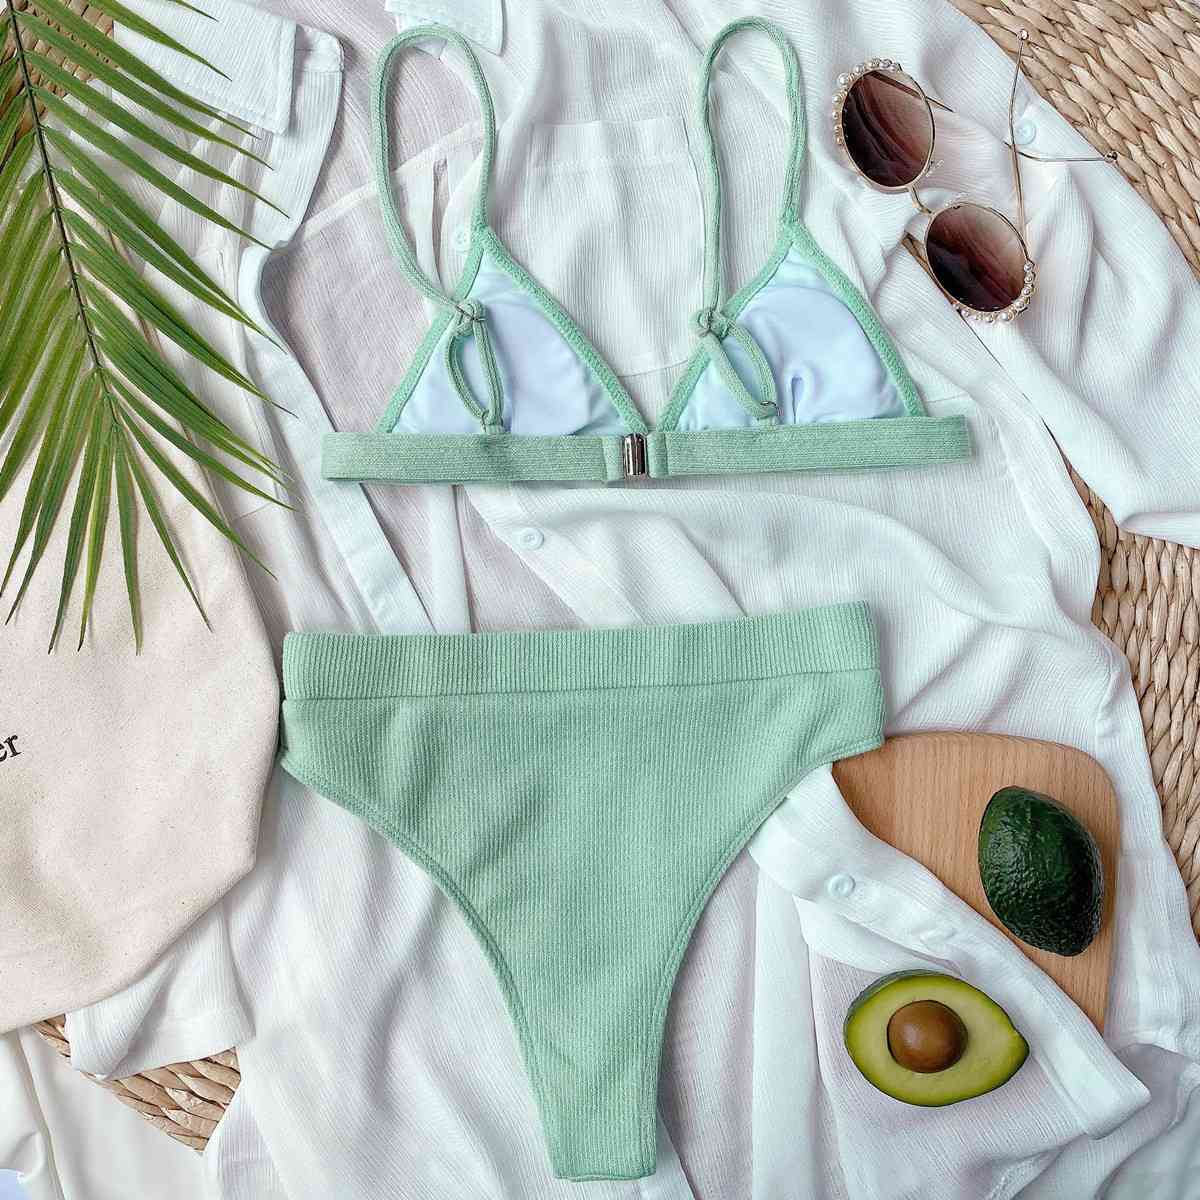 a woman's bikini top and panties with an avocado and sunglasses